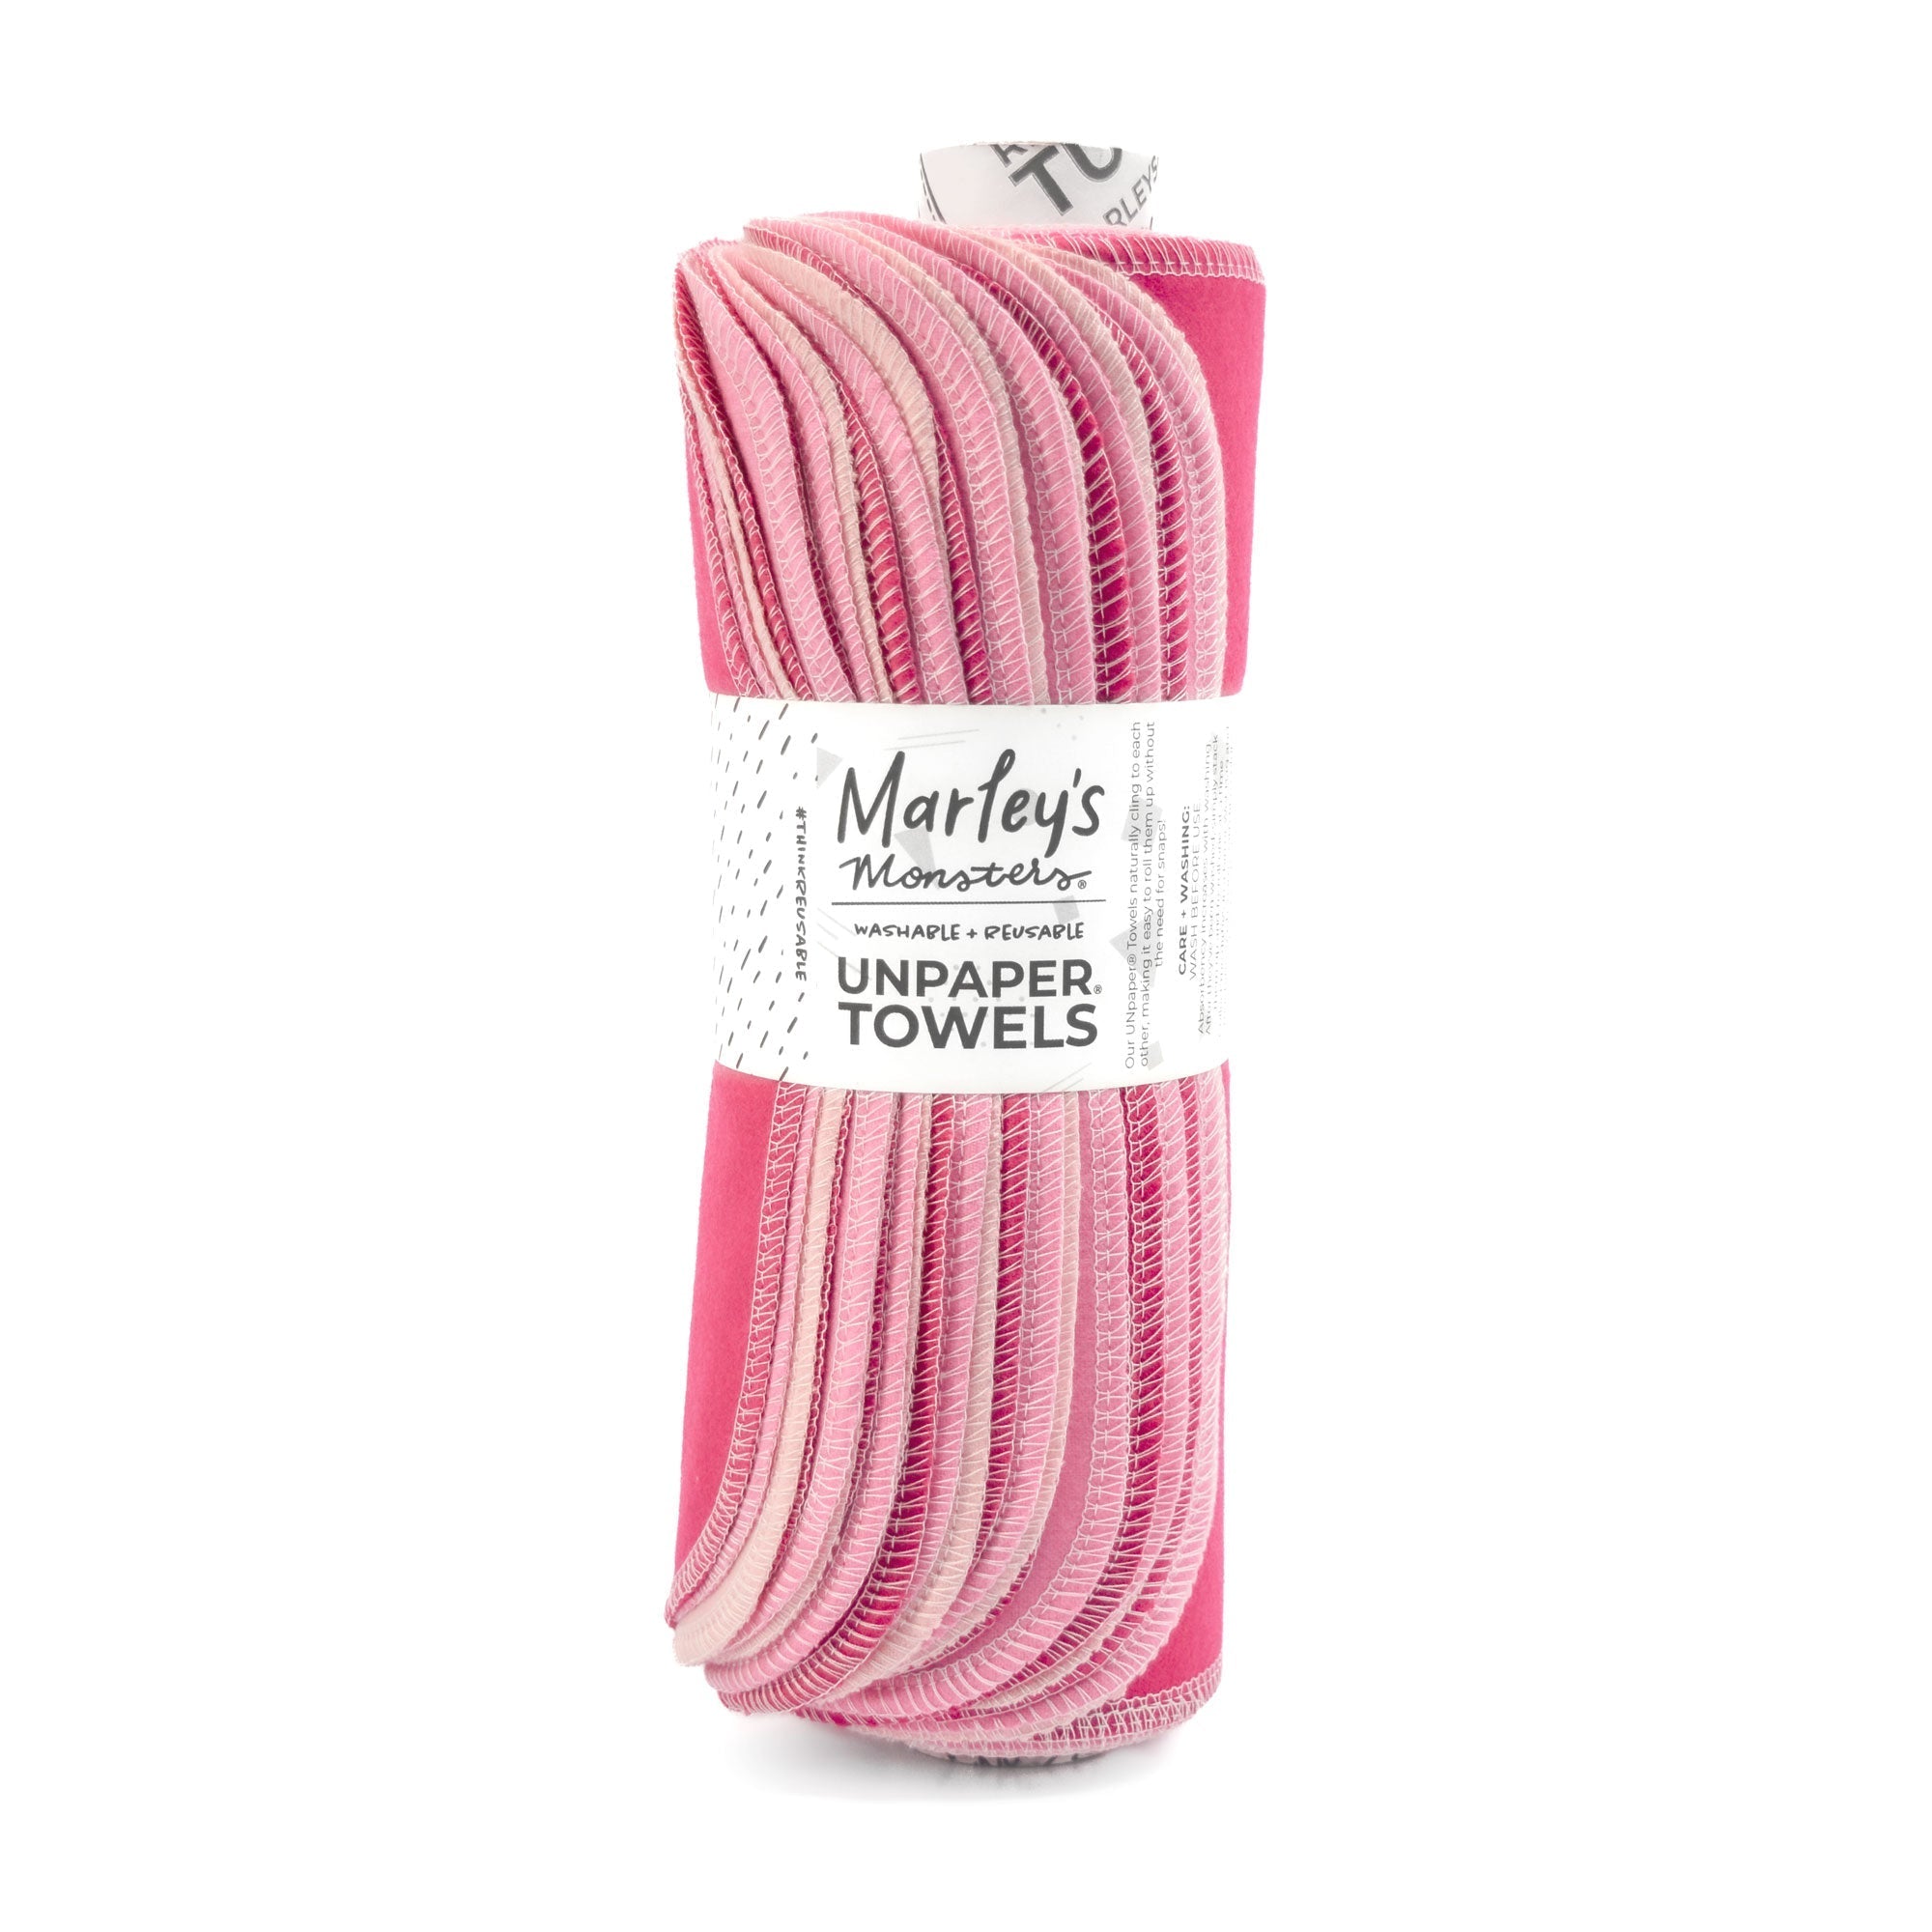 UNpaper® Towels: Pinks - Marley's Monsters cotton flannel reusable paper towels